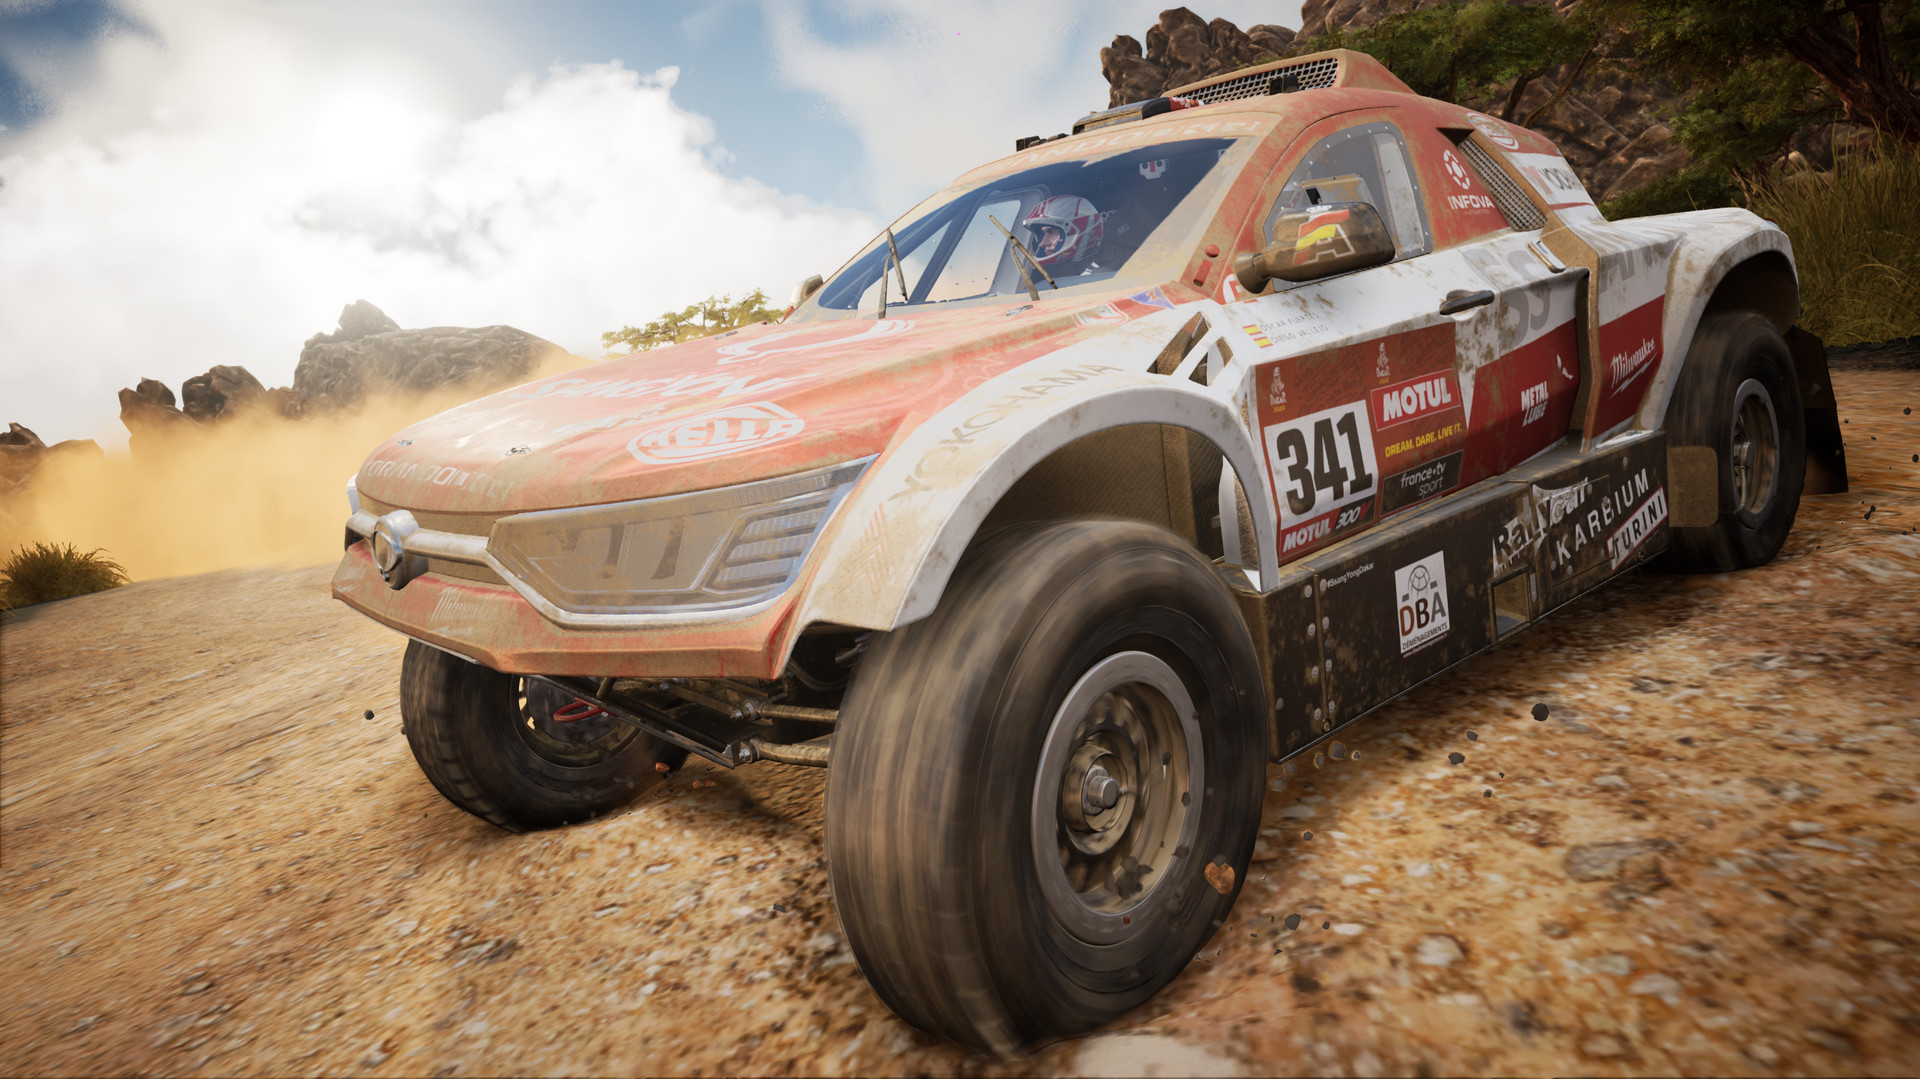 Dakar Desert Rally Free Download